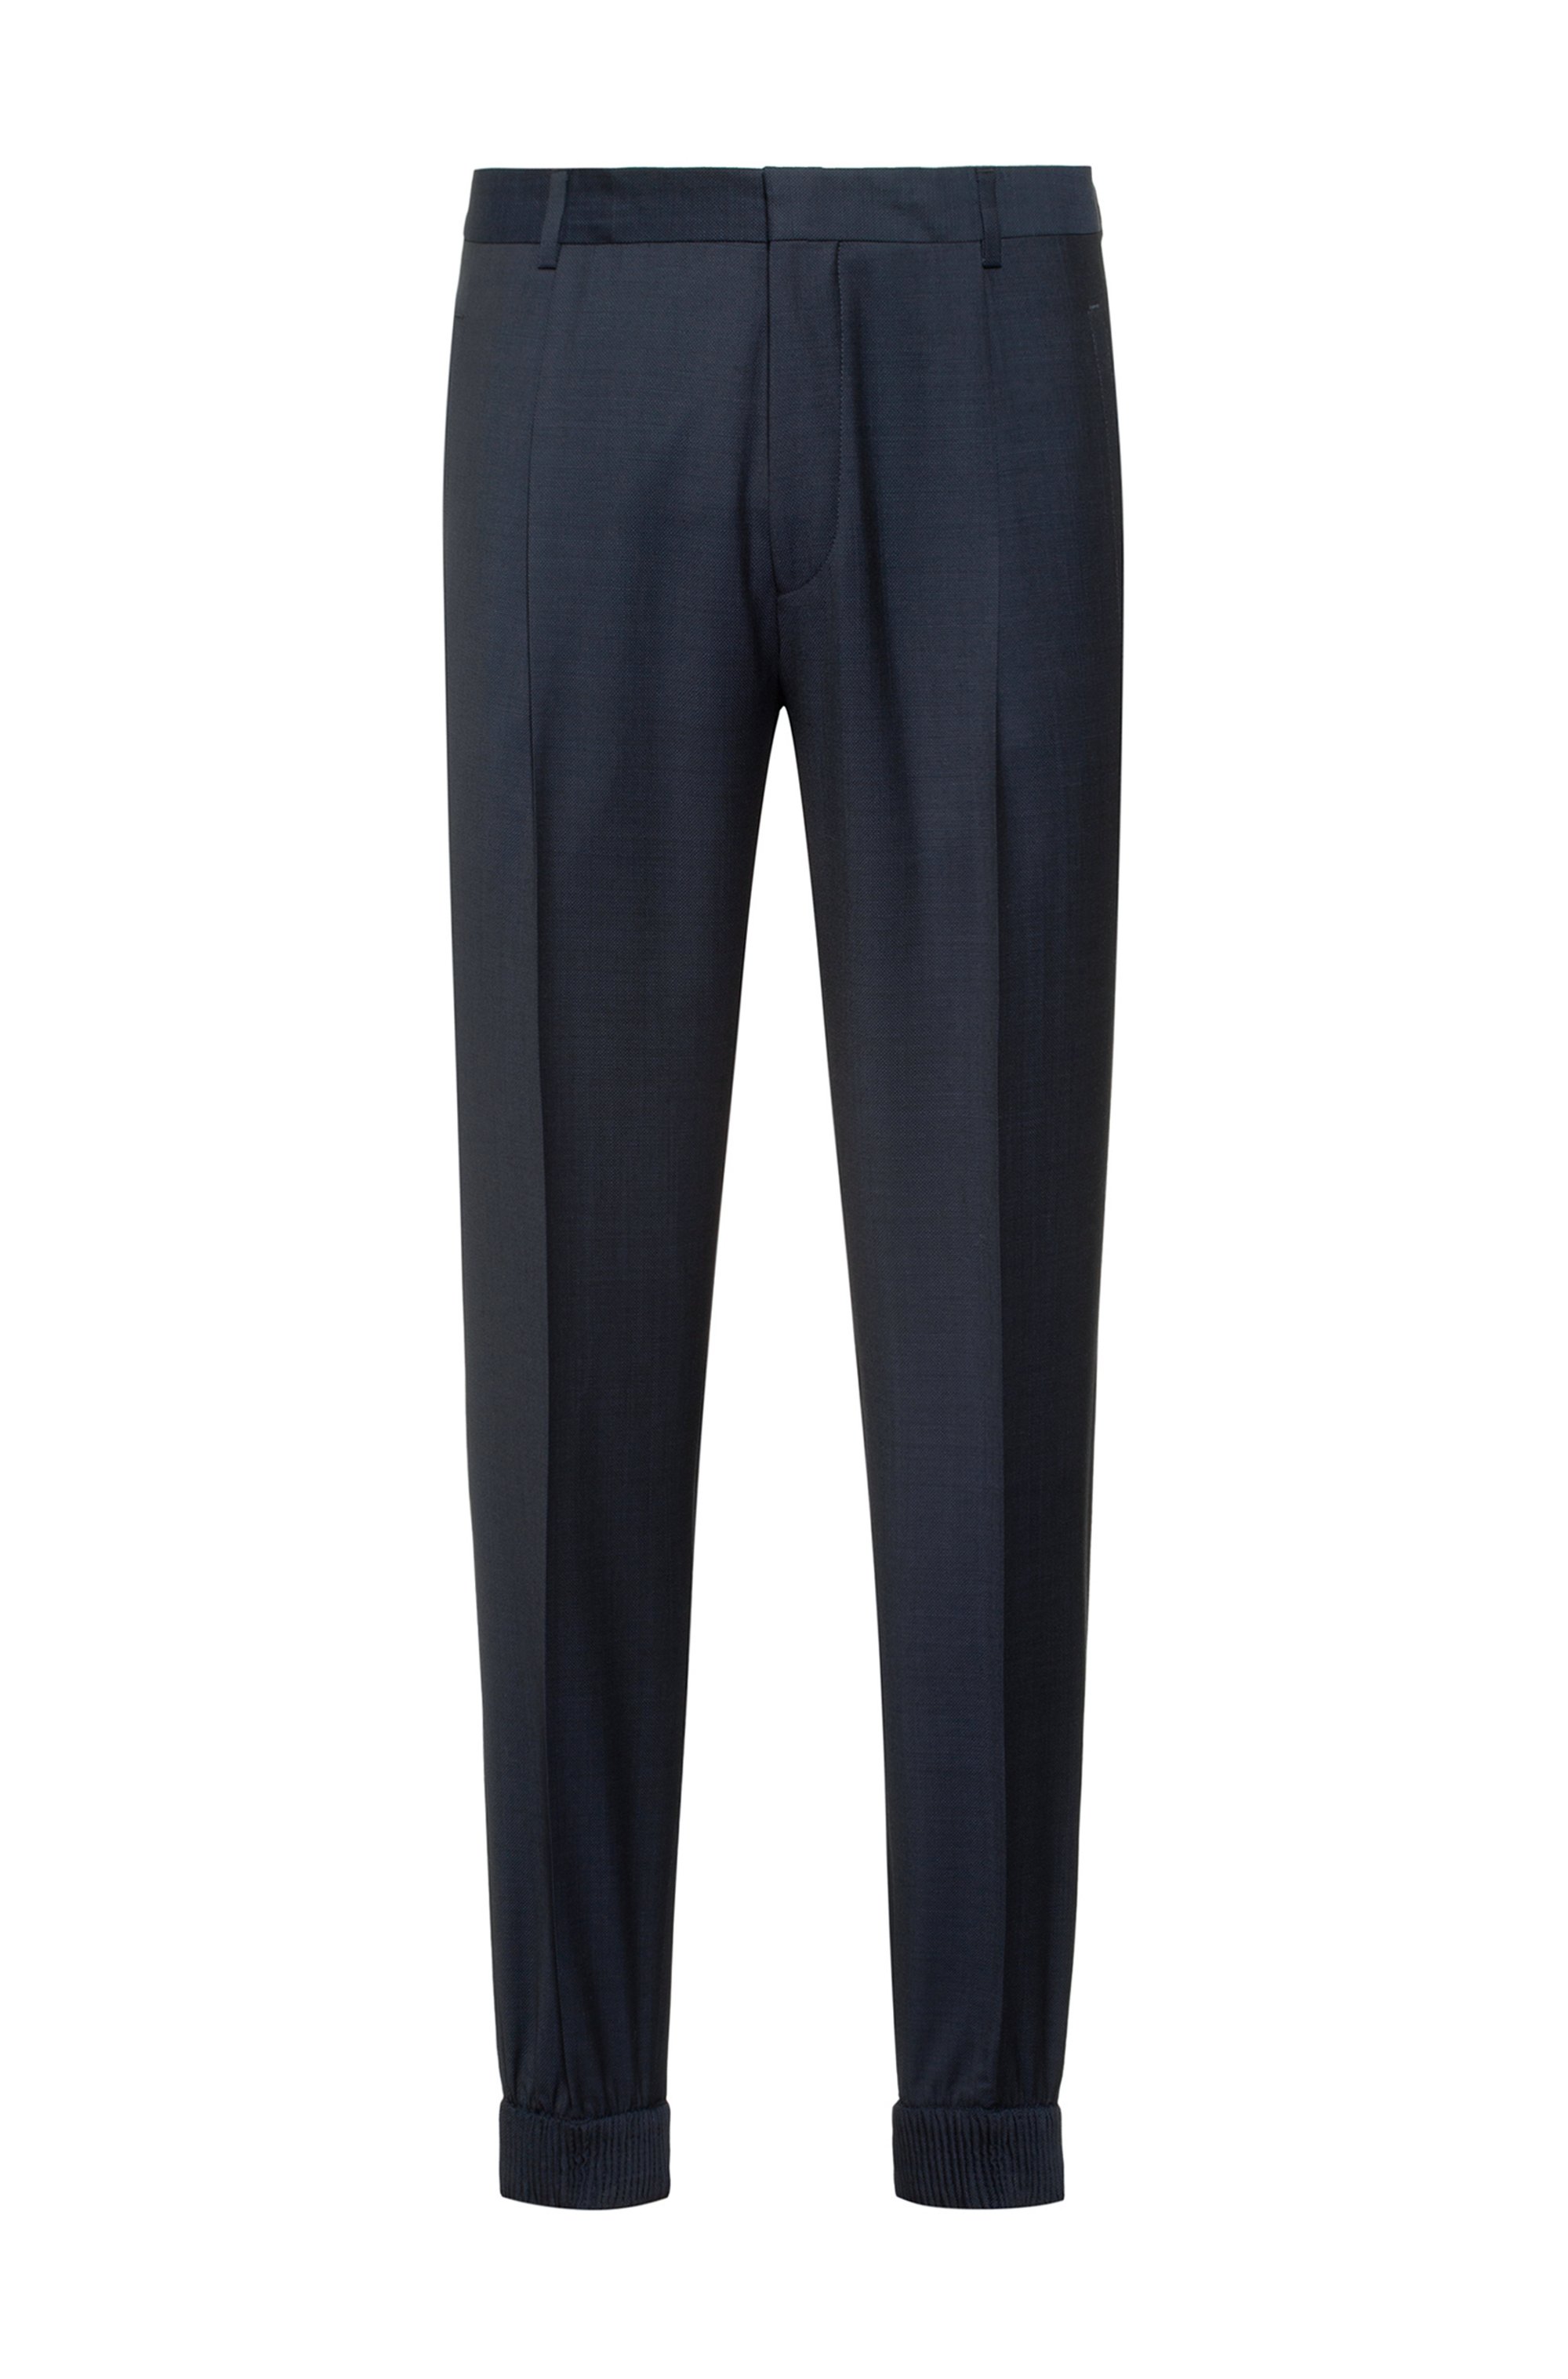 Extra-slim-fit pants in a patterned wool blend, Dark Blue